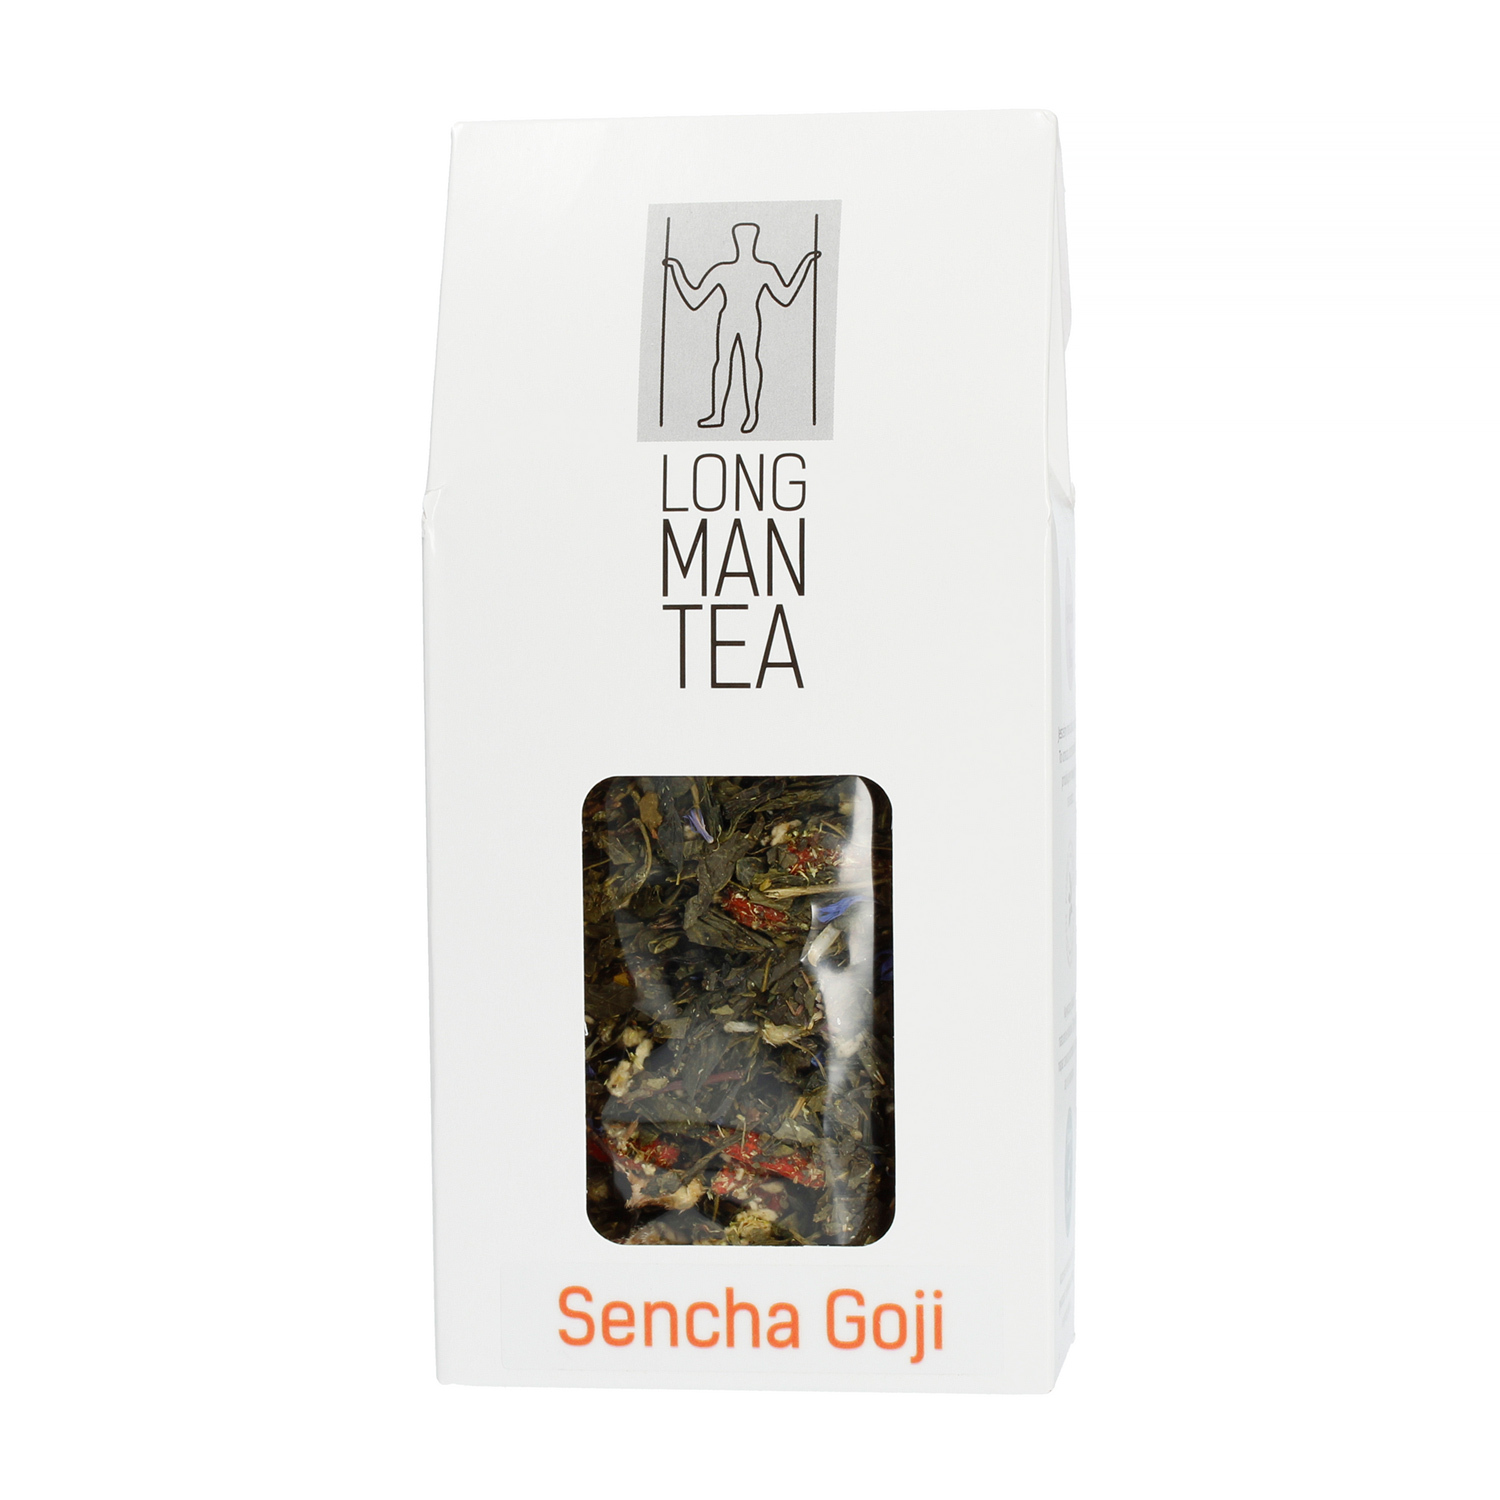 Long Man Tea - Sencha Goji - Loose tea - 80g